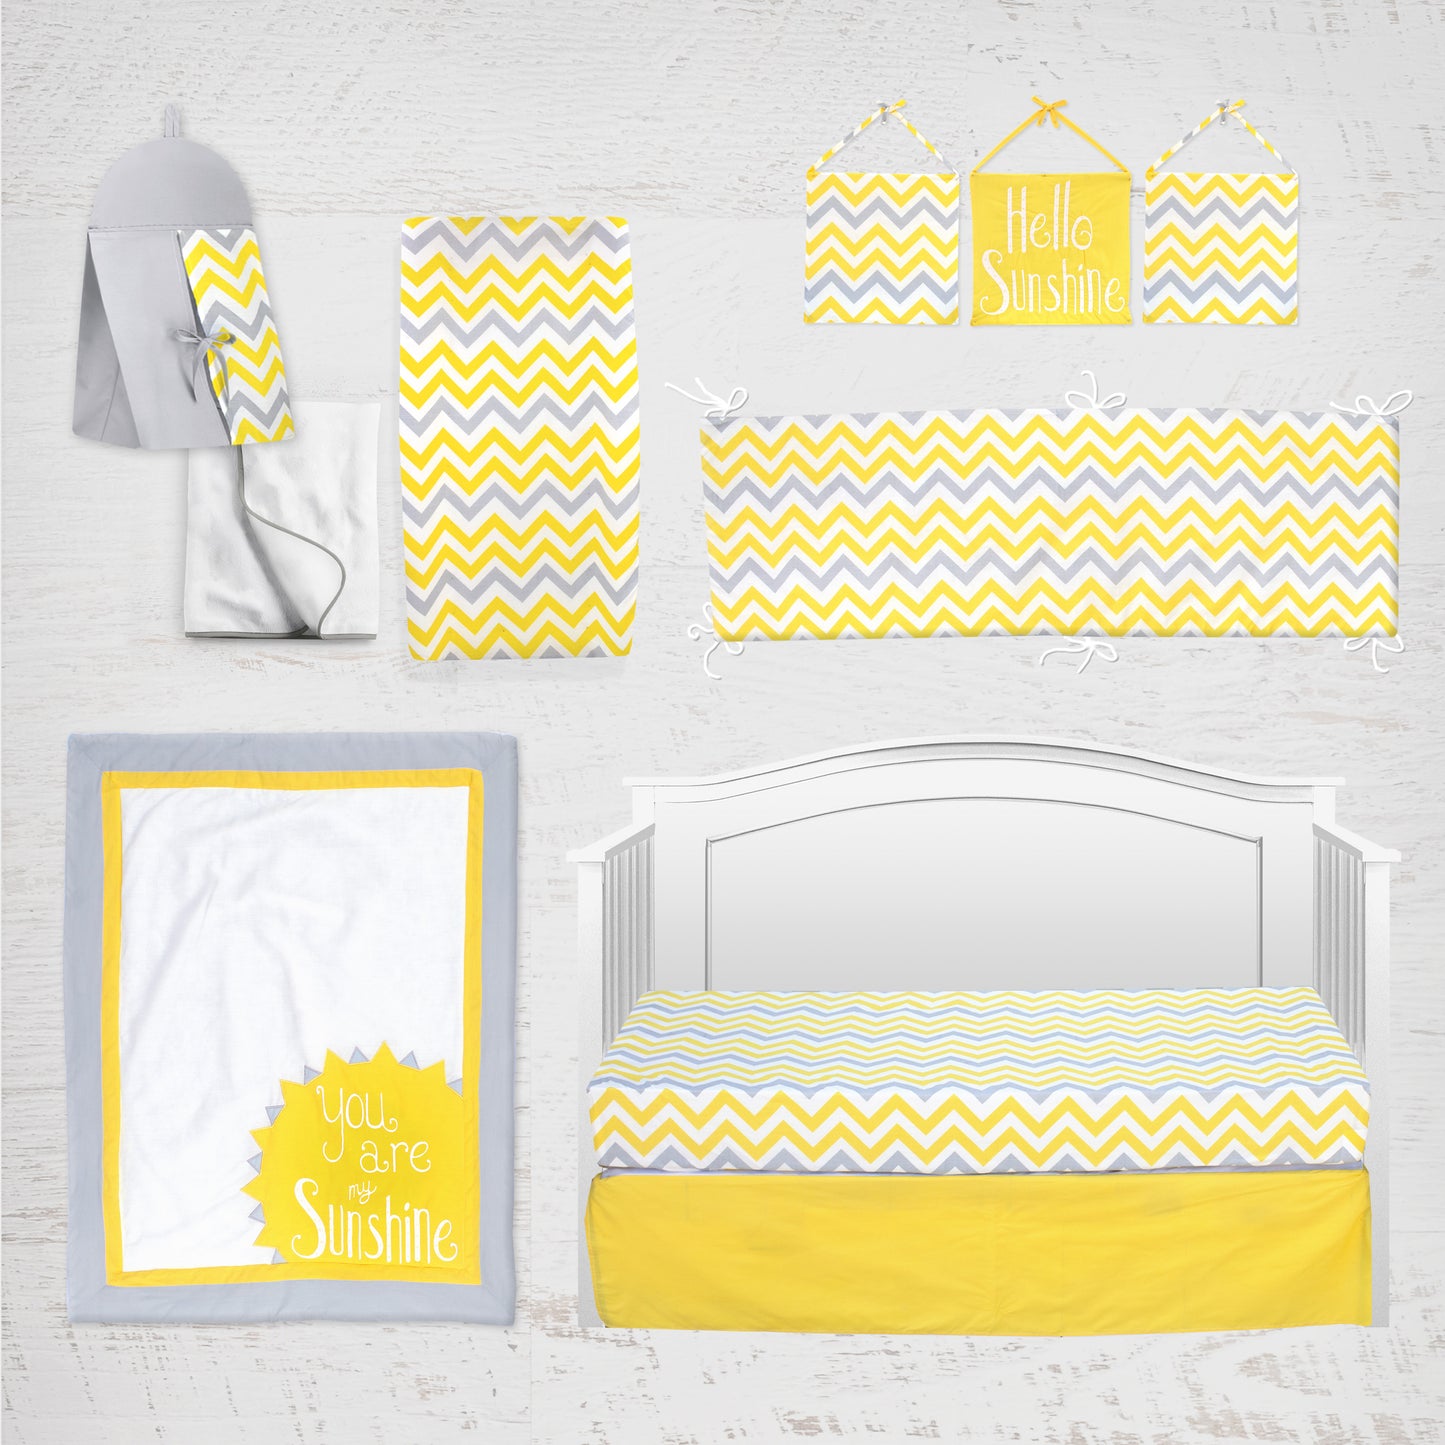 Sunshine 10 Piece Crib Bedding Set